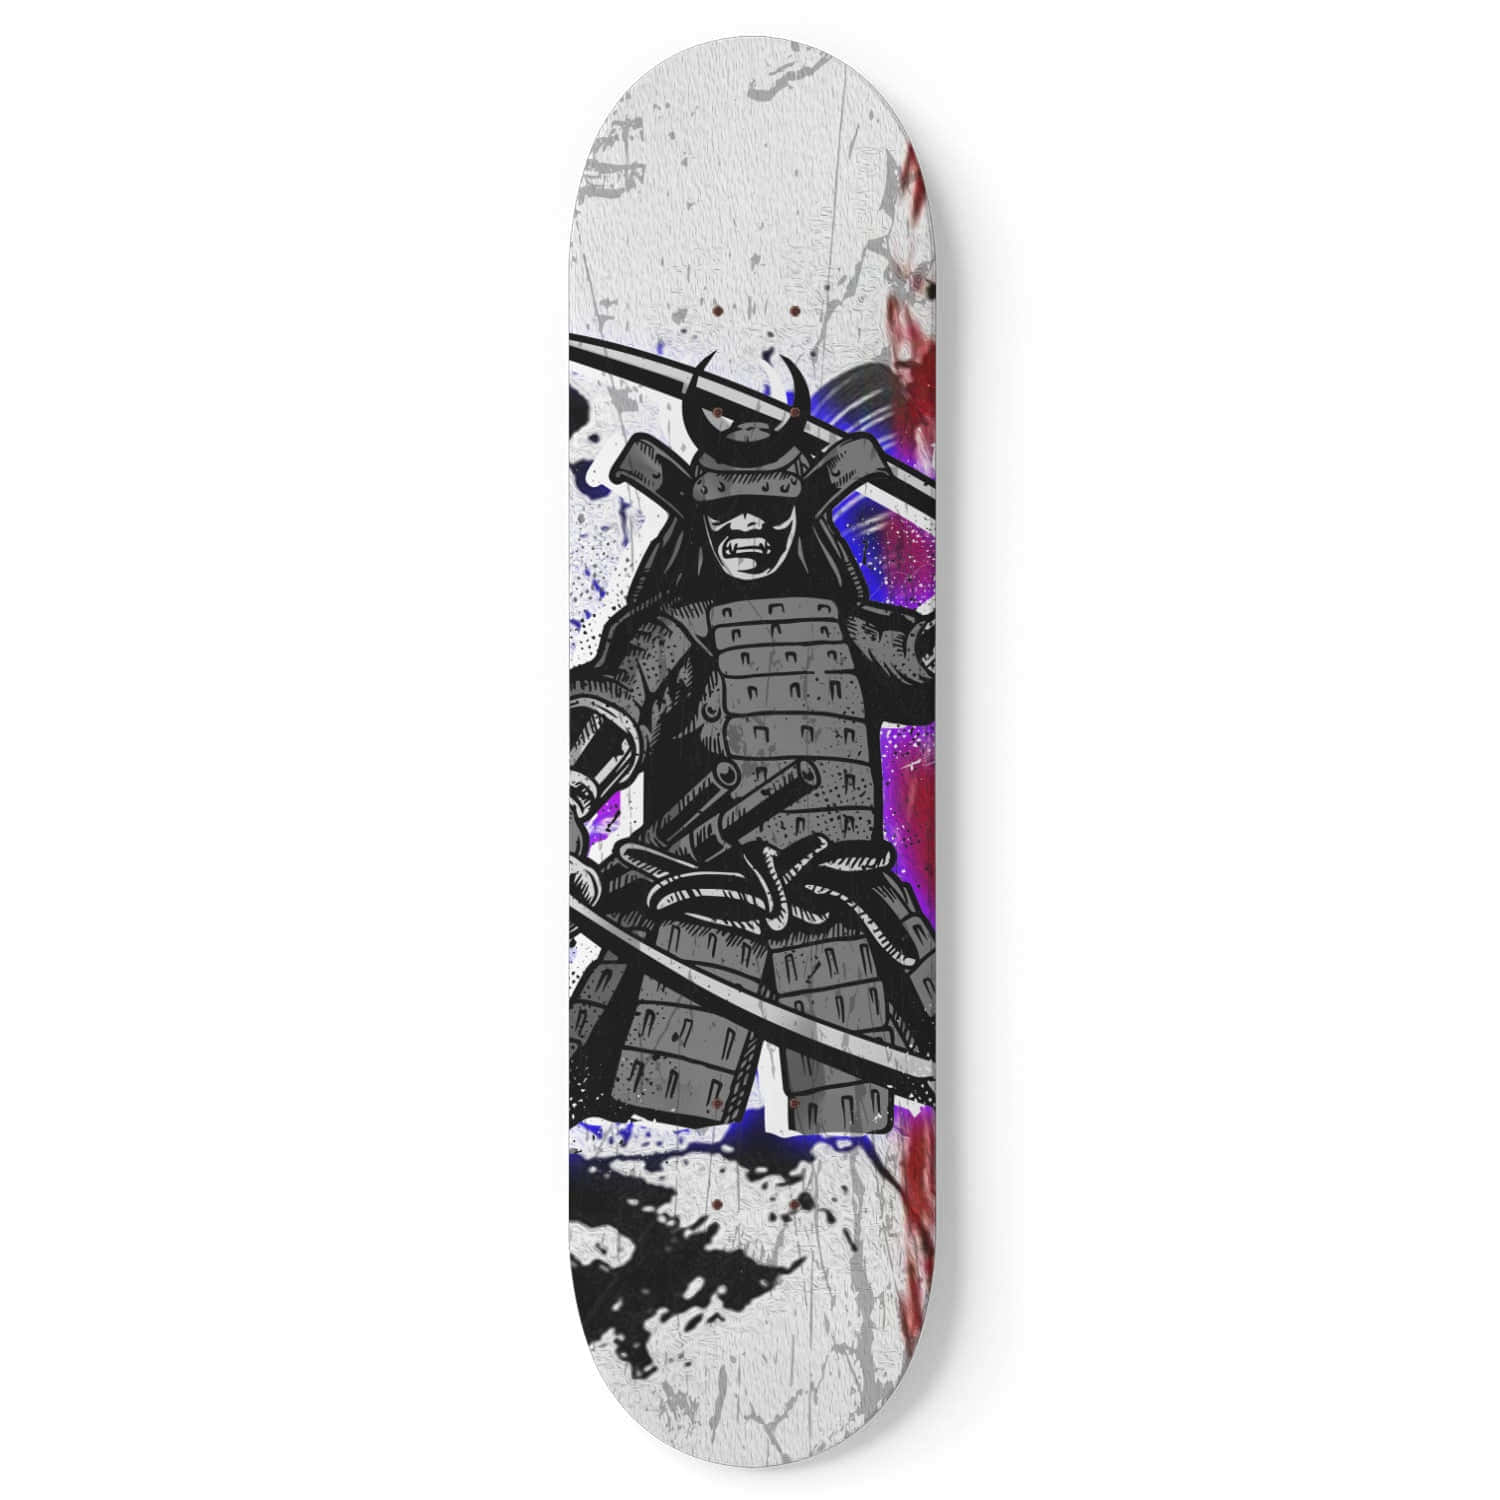 Samurai Graffiti Skateboard Deck Wallpaper